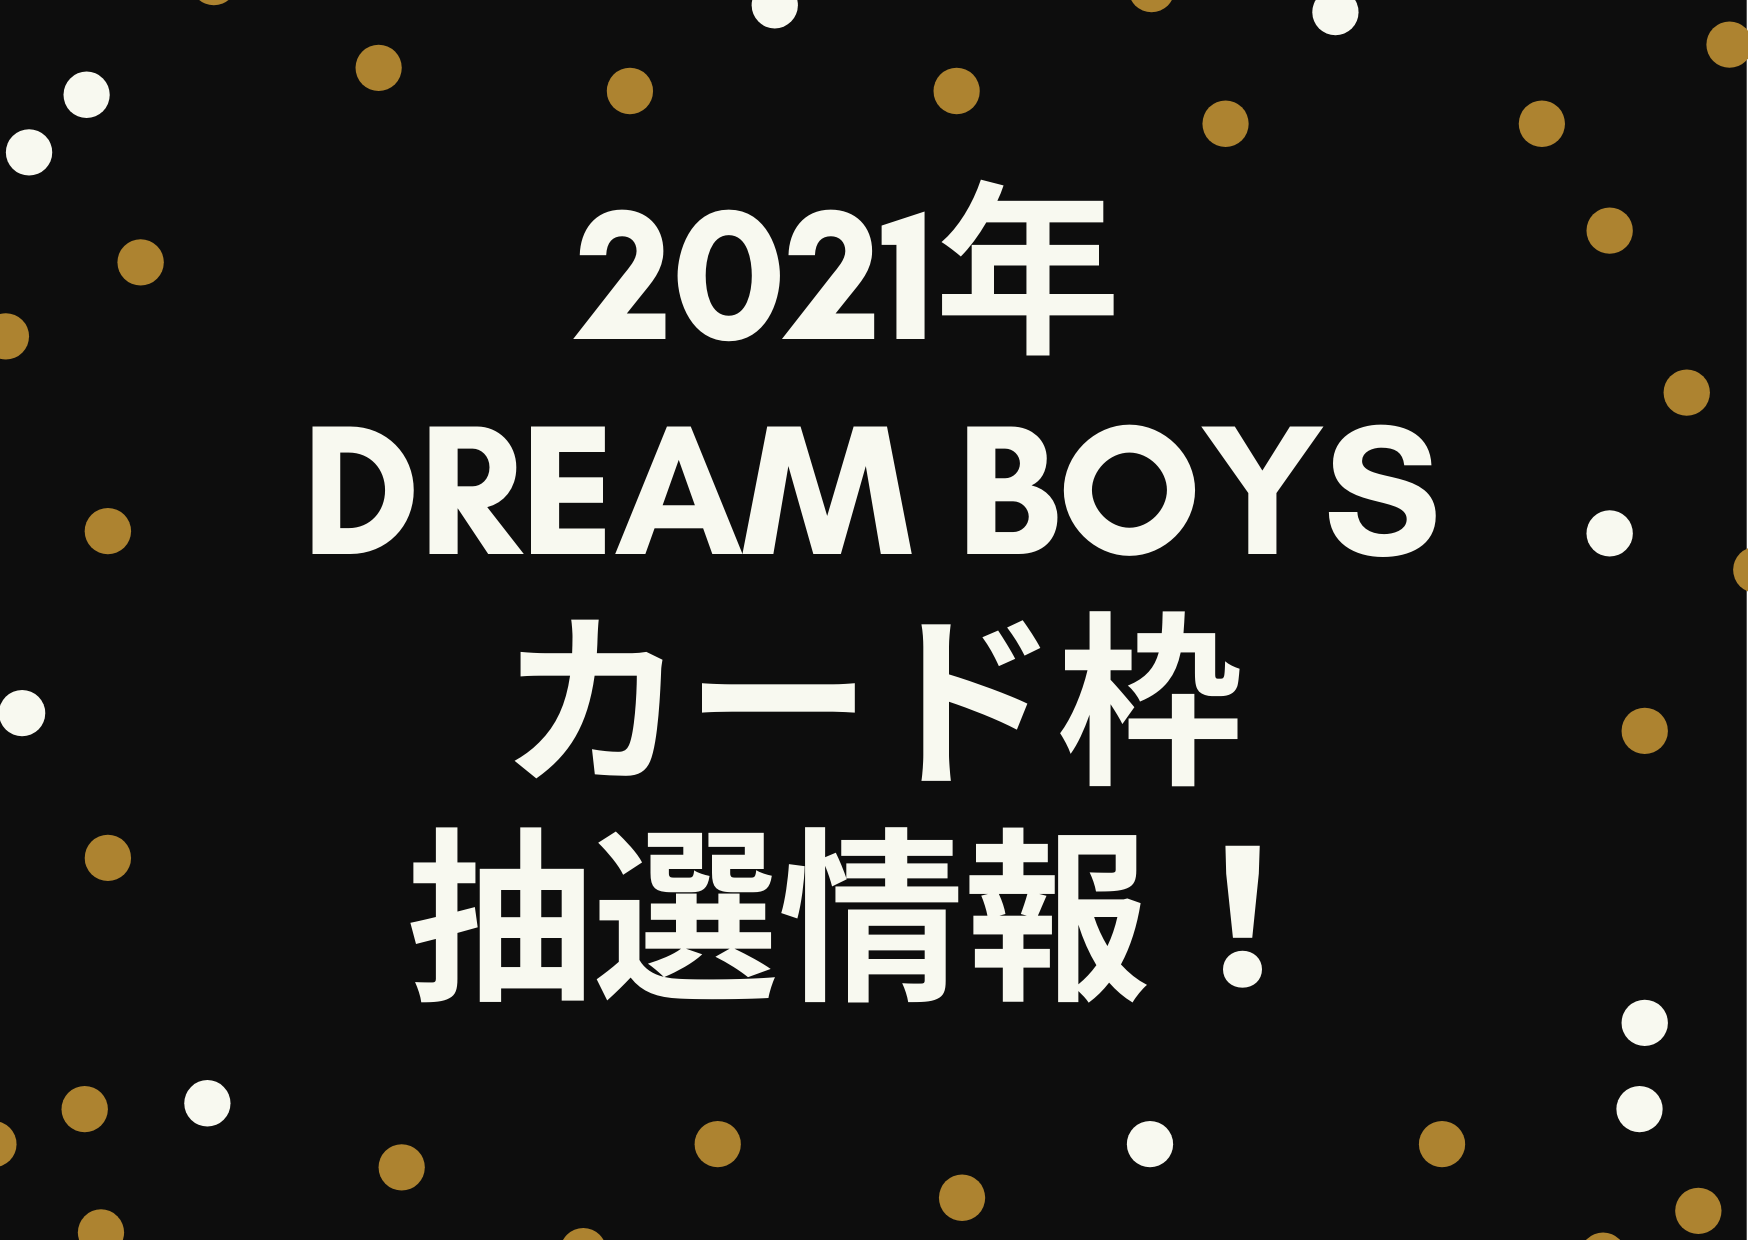 2021,DREAMBOYS,ドリボ,カード枠,抽選,申し込み,菊池風磨,田中樹